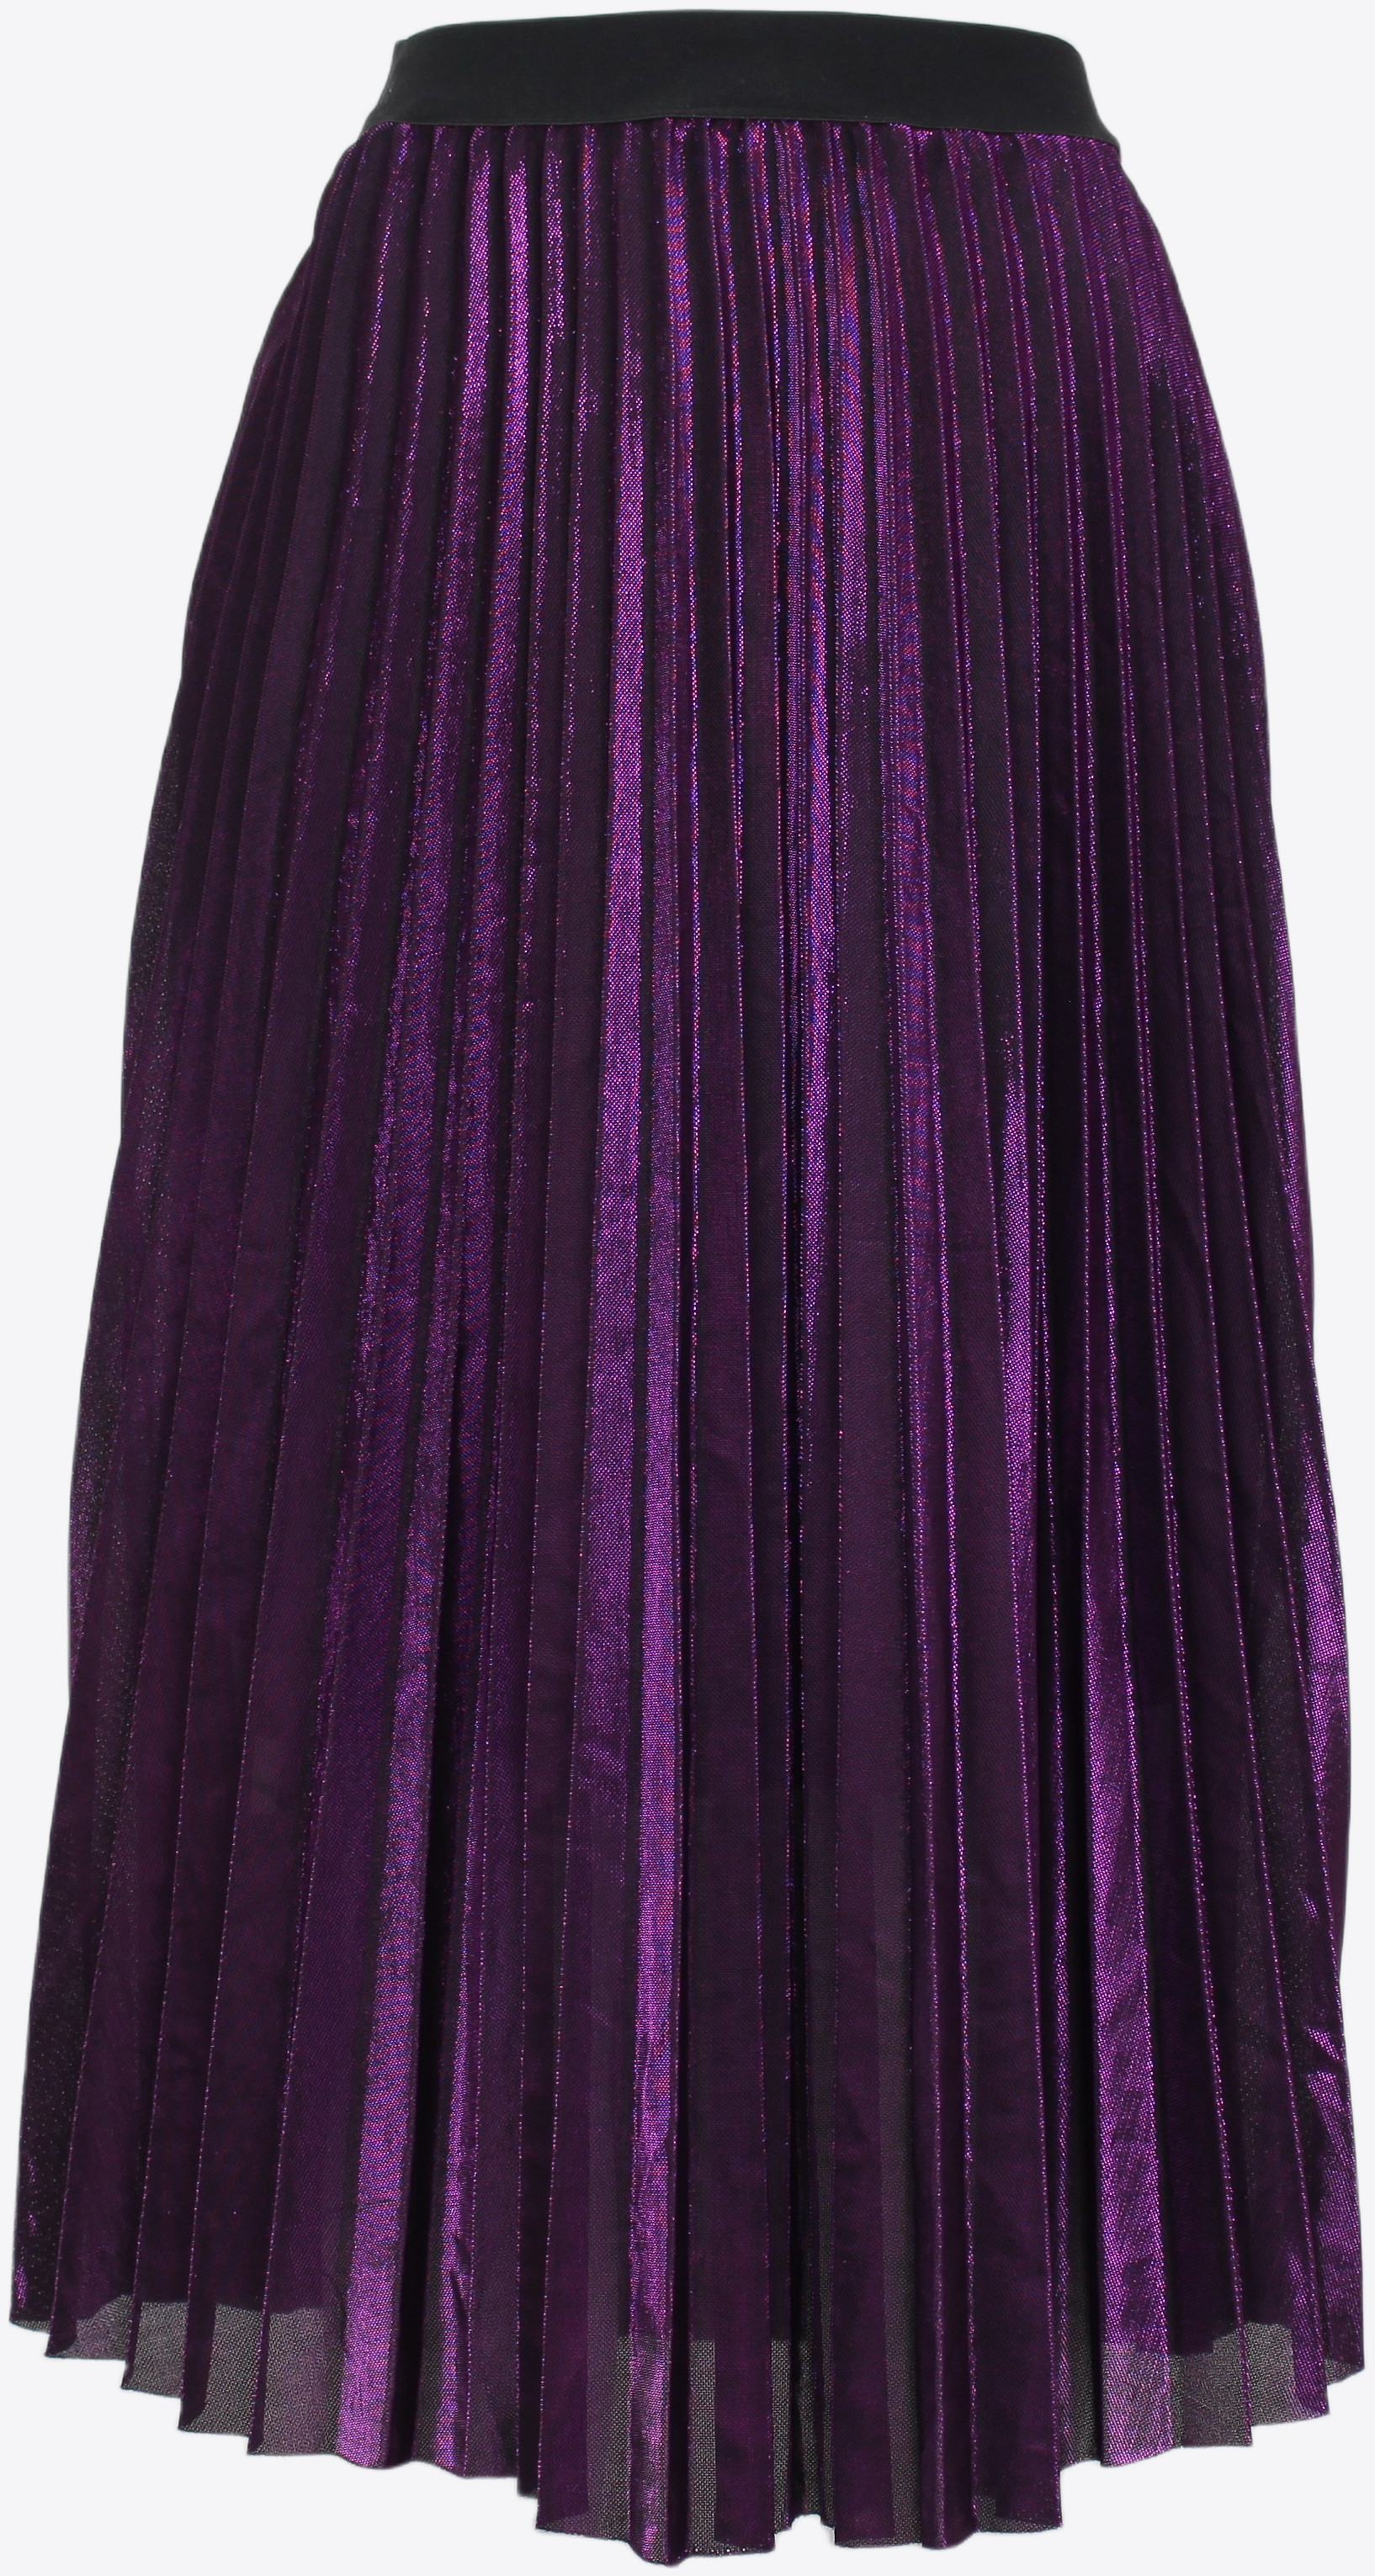 violet chiffon skirt